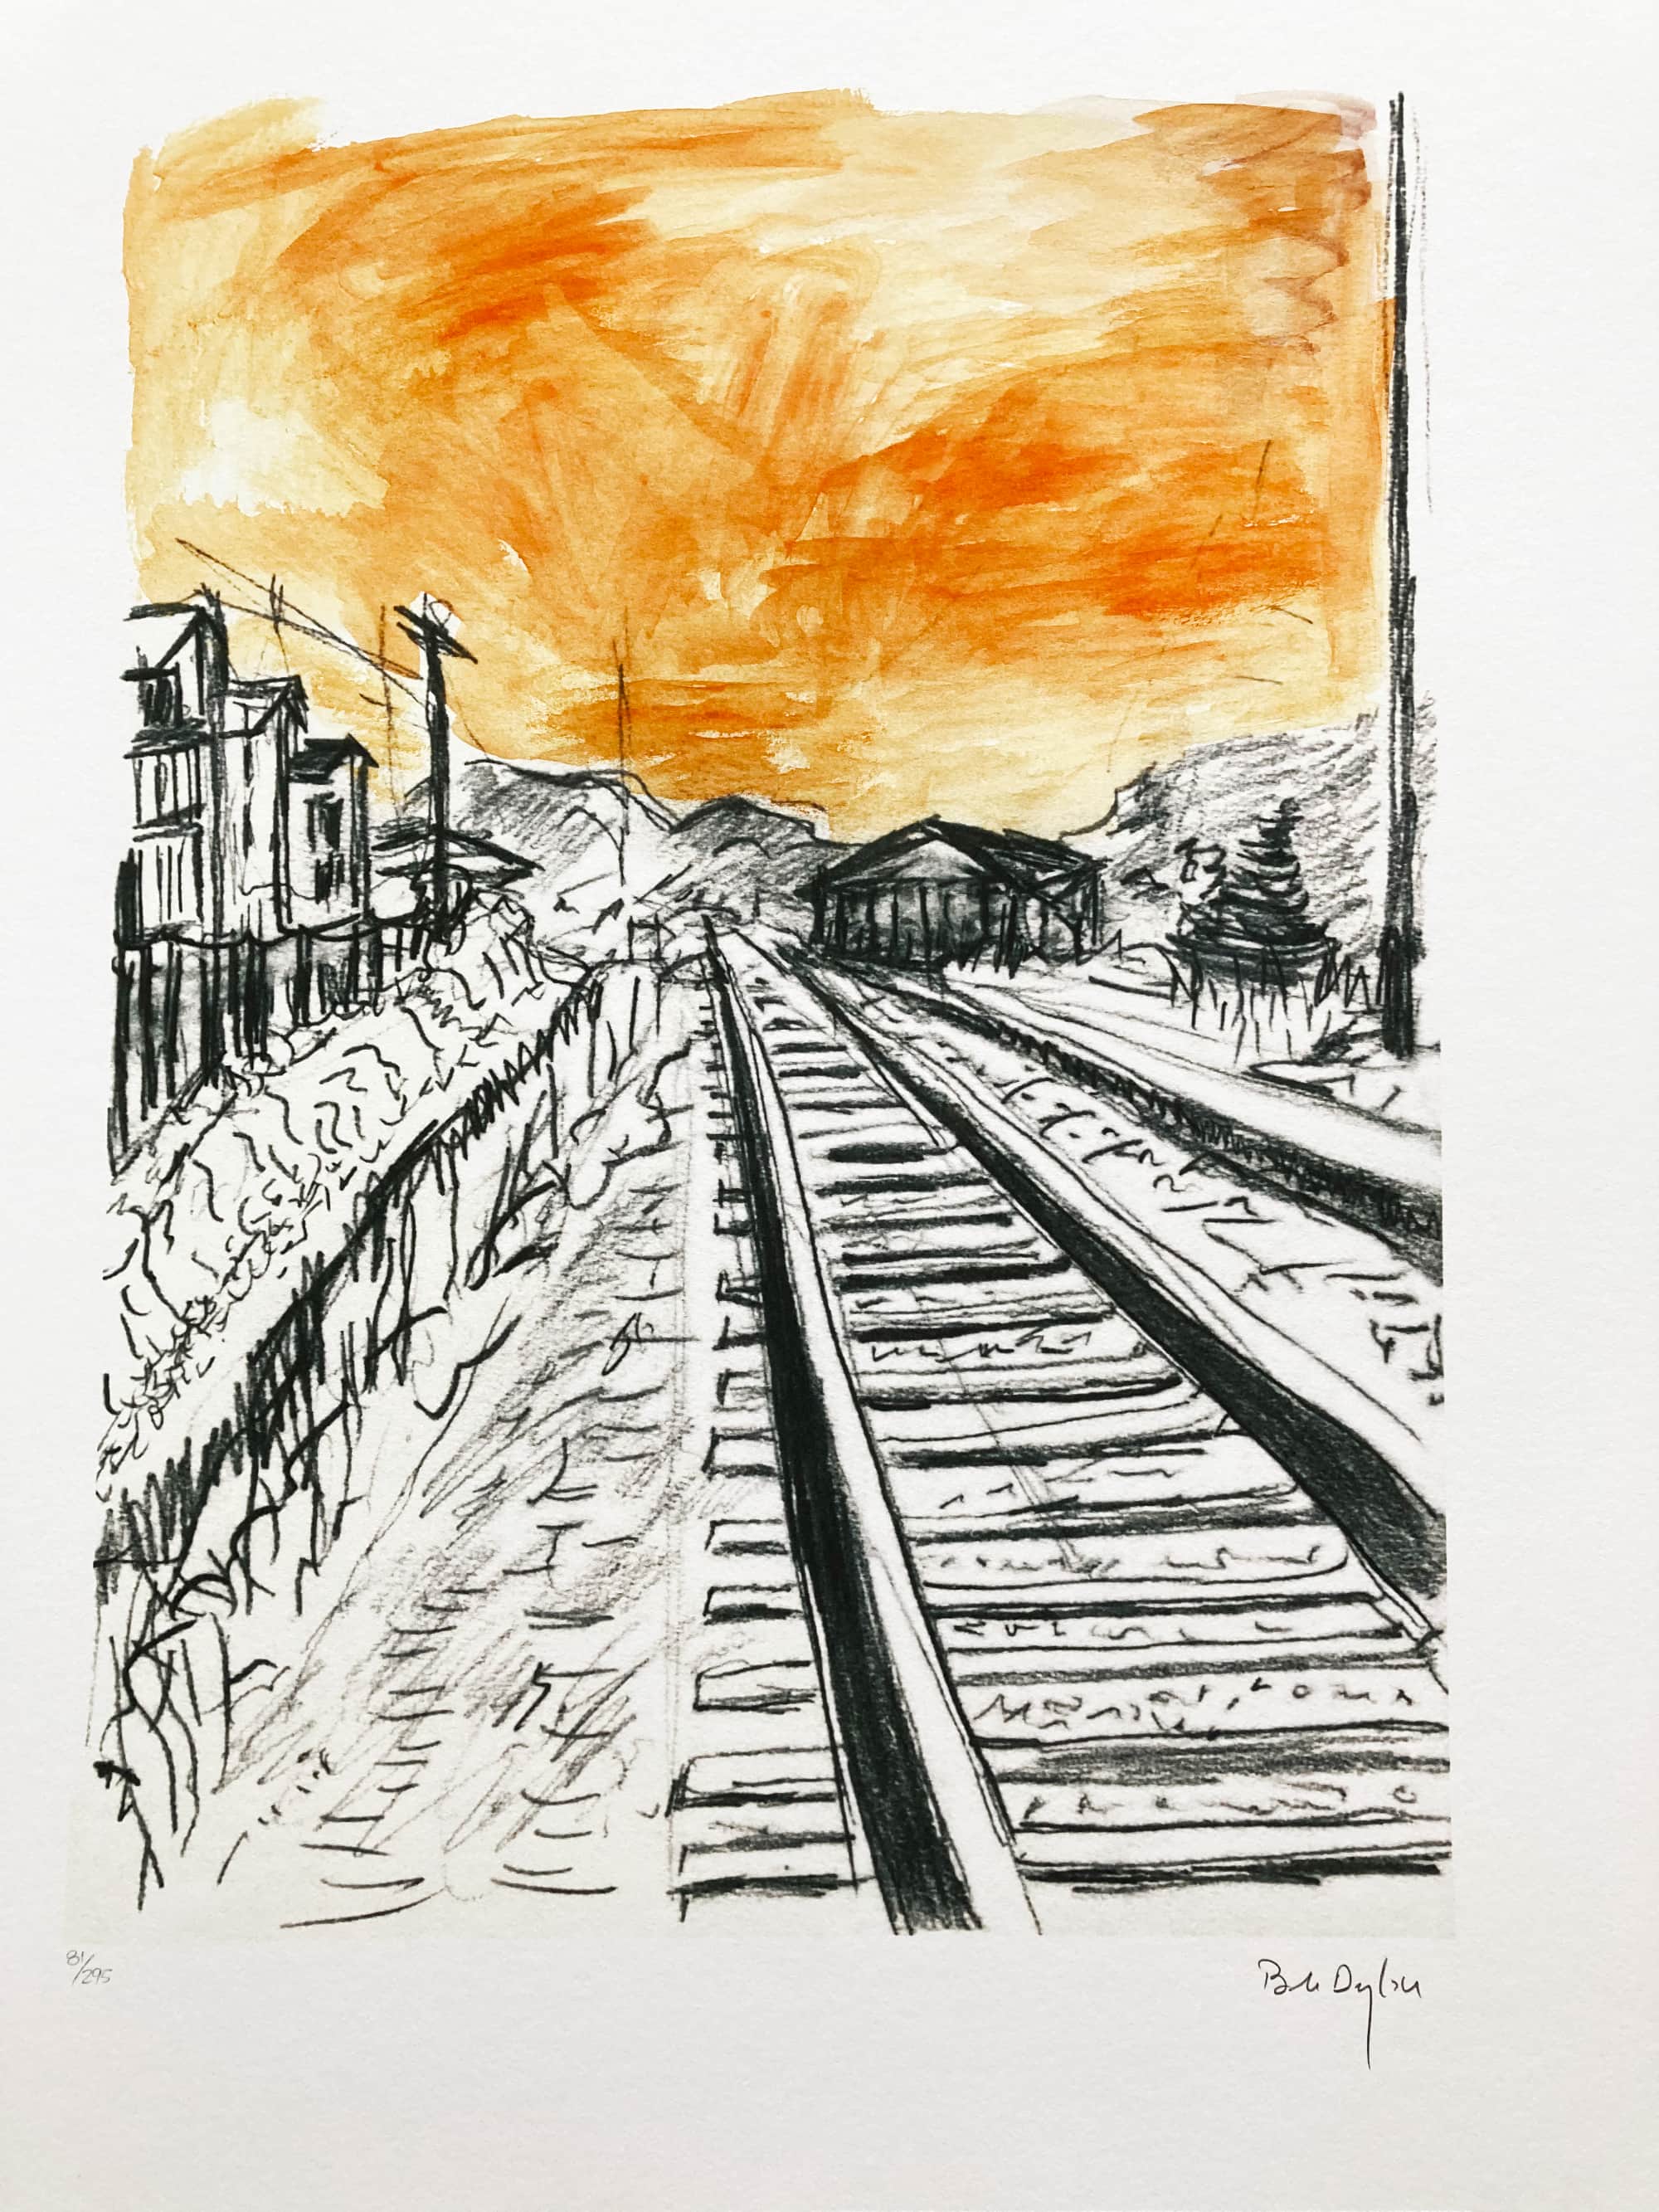 Bob Dylan - Train Tracks, 2008 (orange)